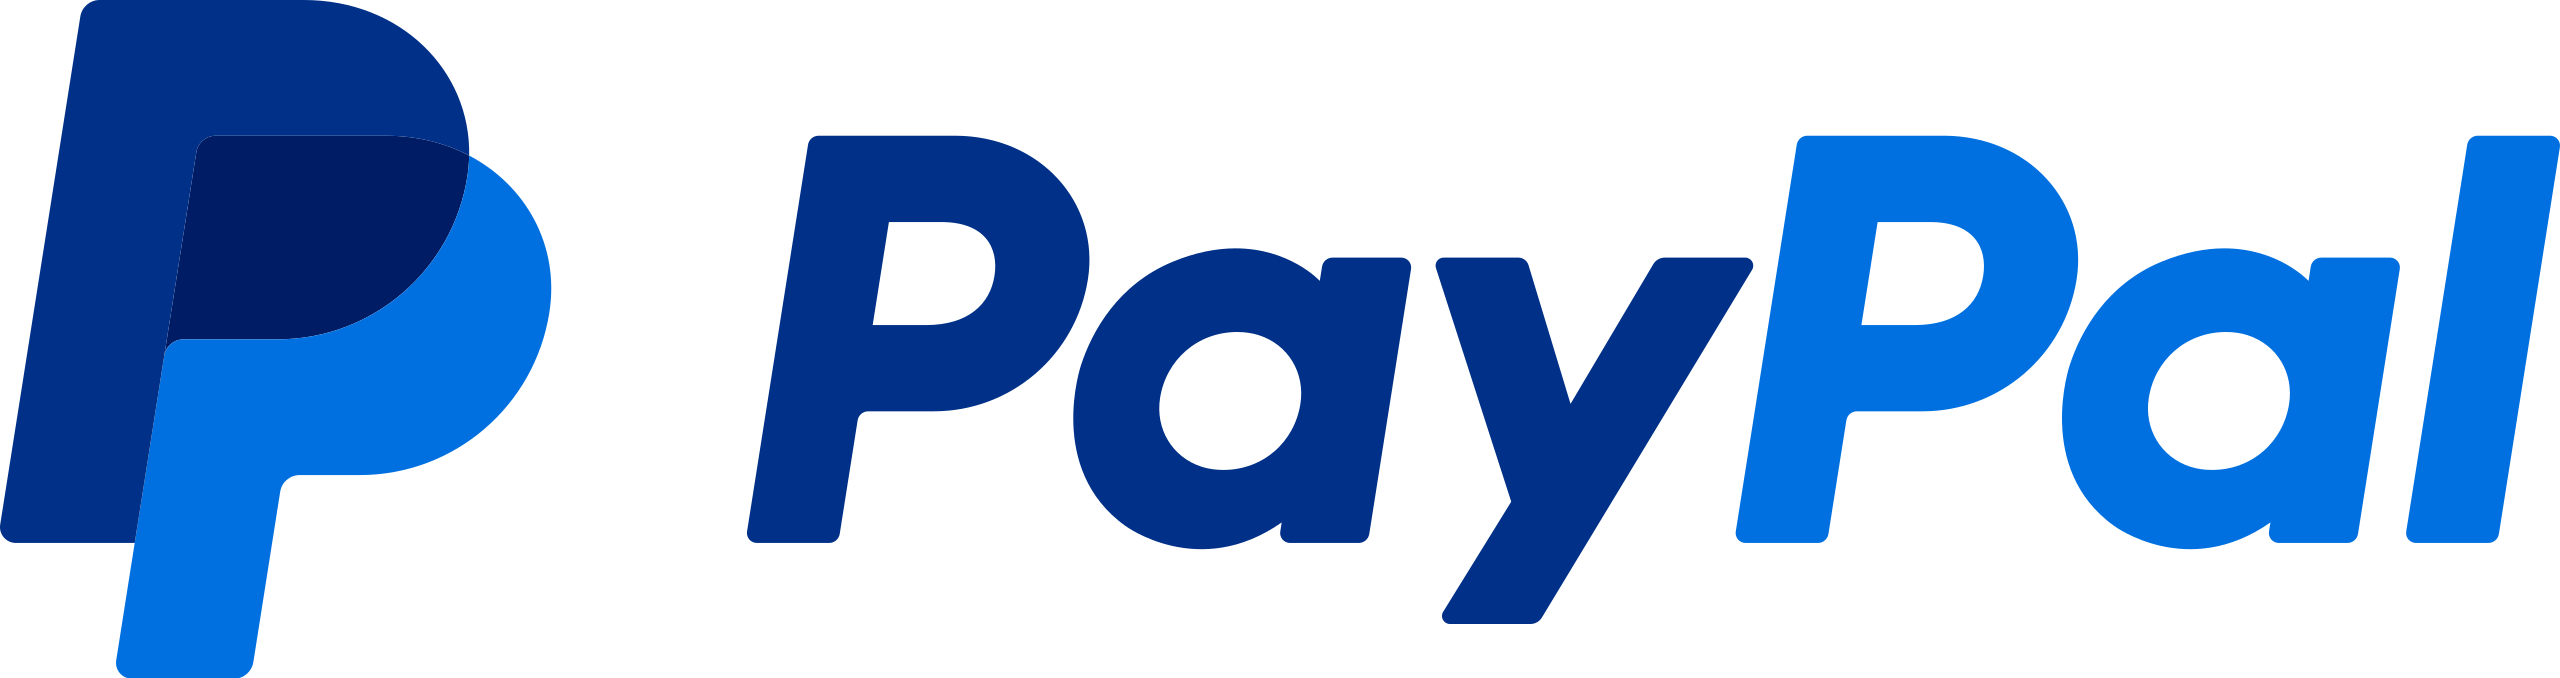 Paypal logo Icons & Symbols